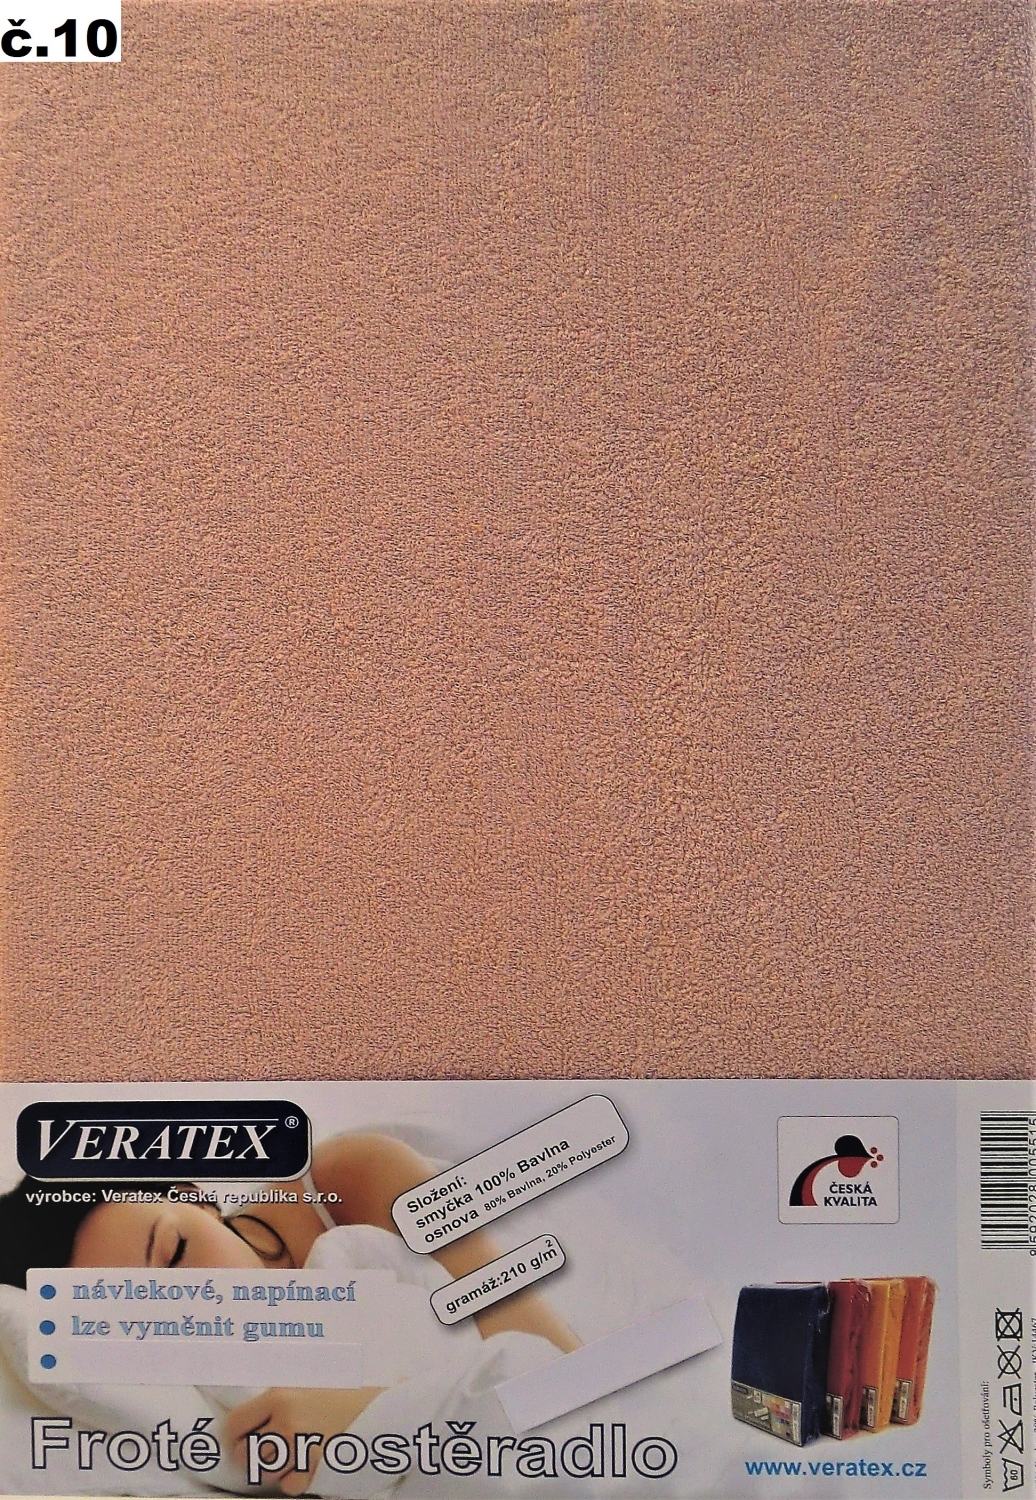 Veratex Froté prostěradlo jednolůžko 90x200/25cm (č.10-starorůžové)